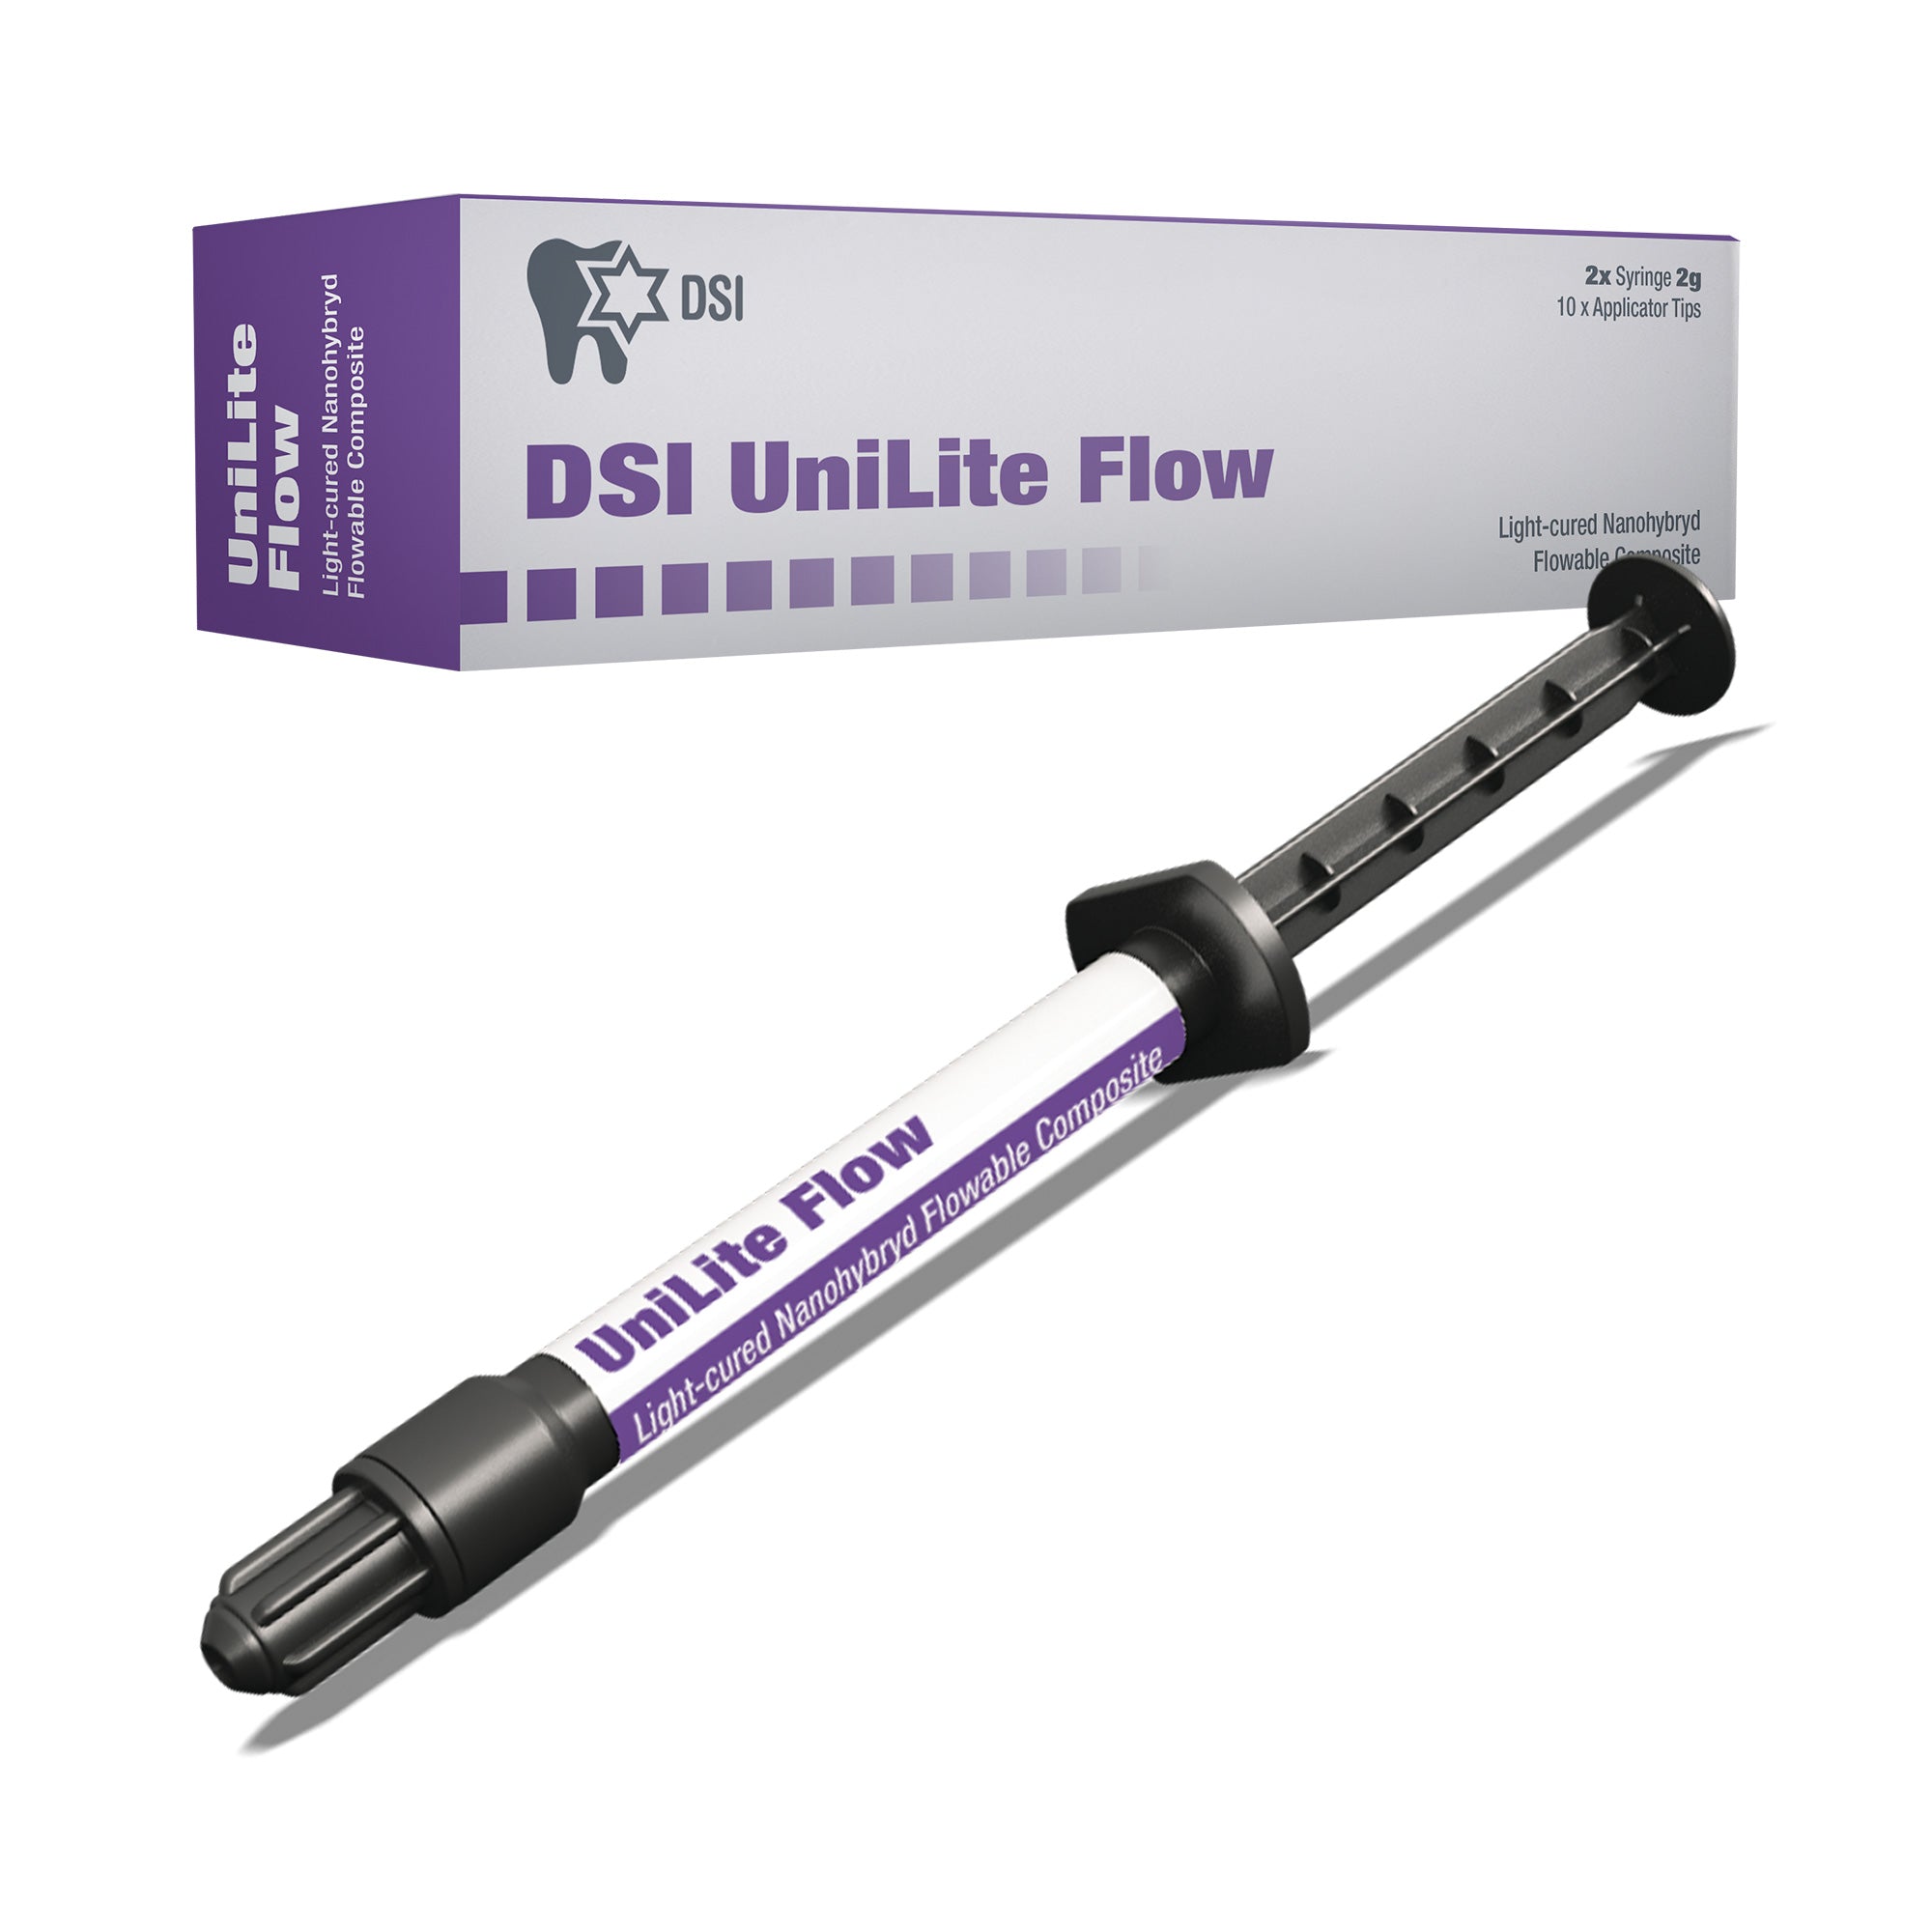 DSI UniLite Flow NanoHybrid LC Flowable Composite in 2x2g Syringe